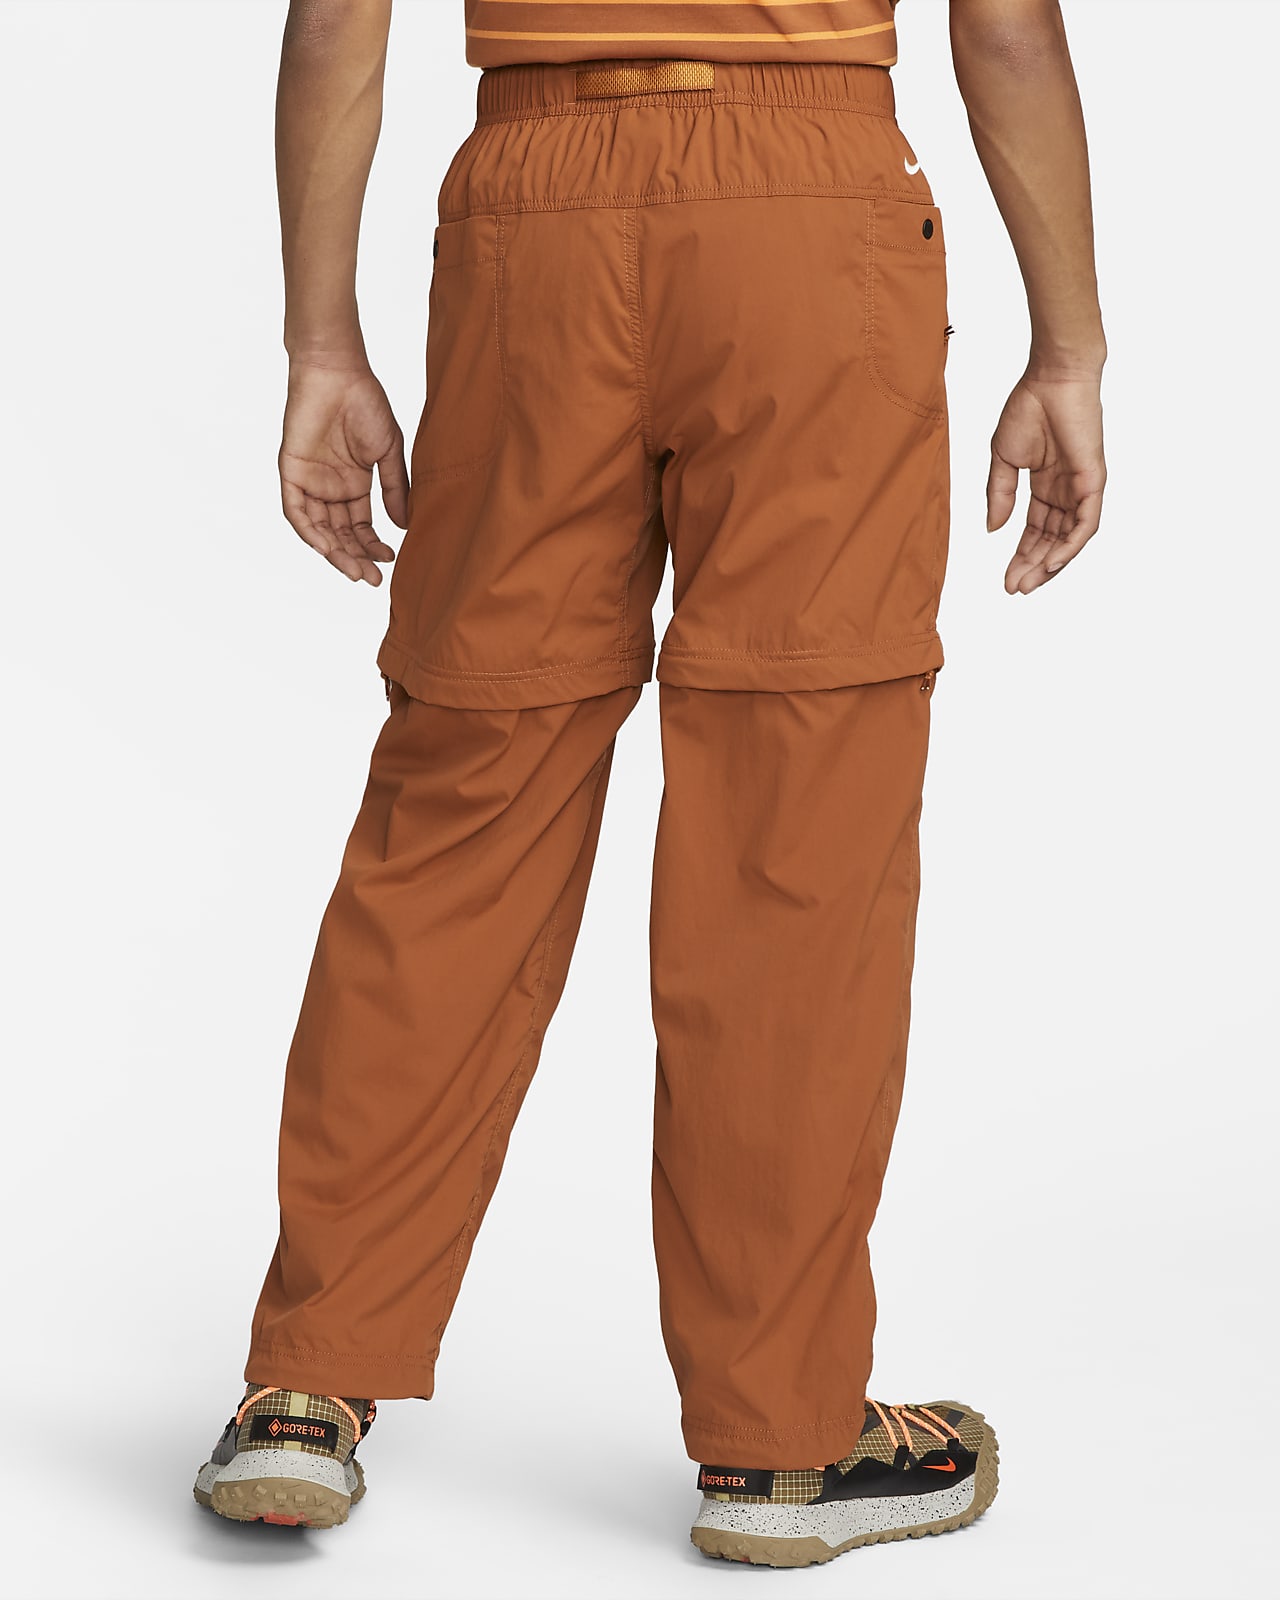 Zpervoba Cargo Sweatpants for Men Cargo Pants Fleece India | Ubuy